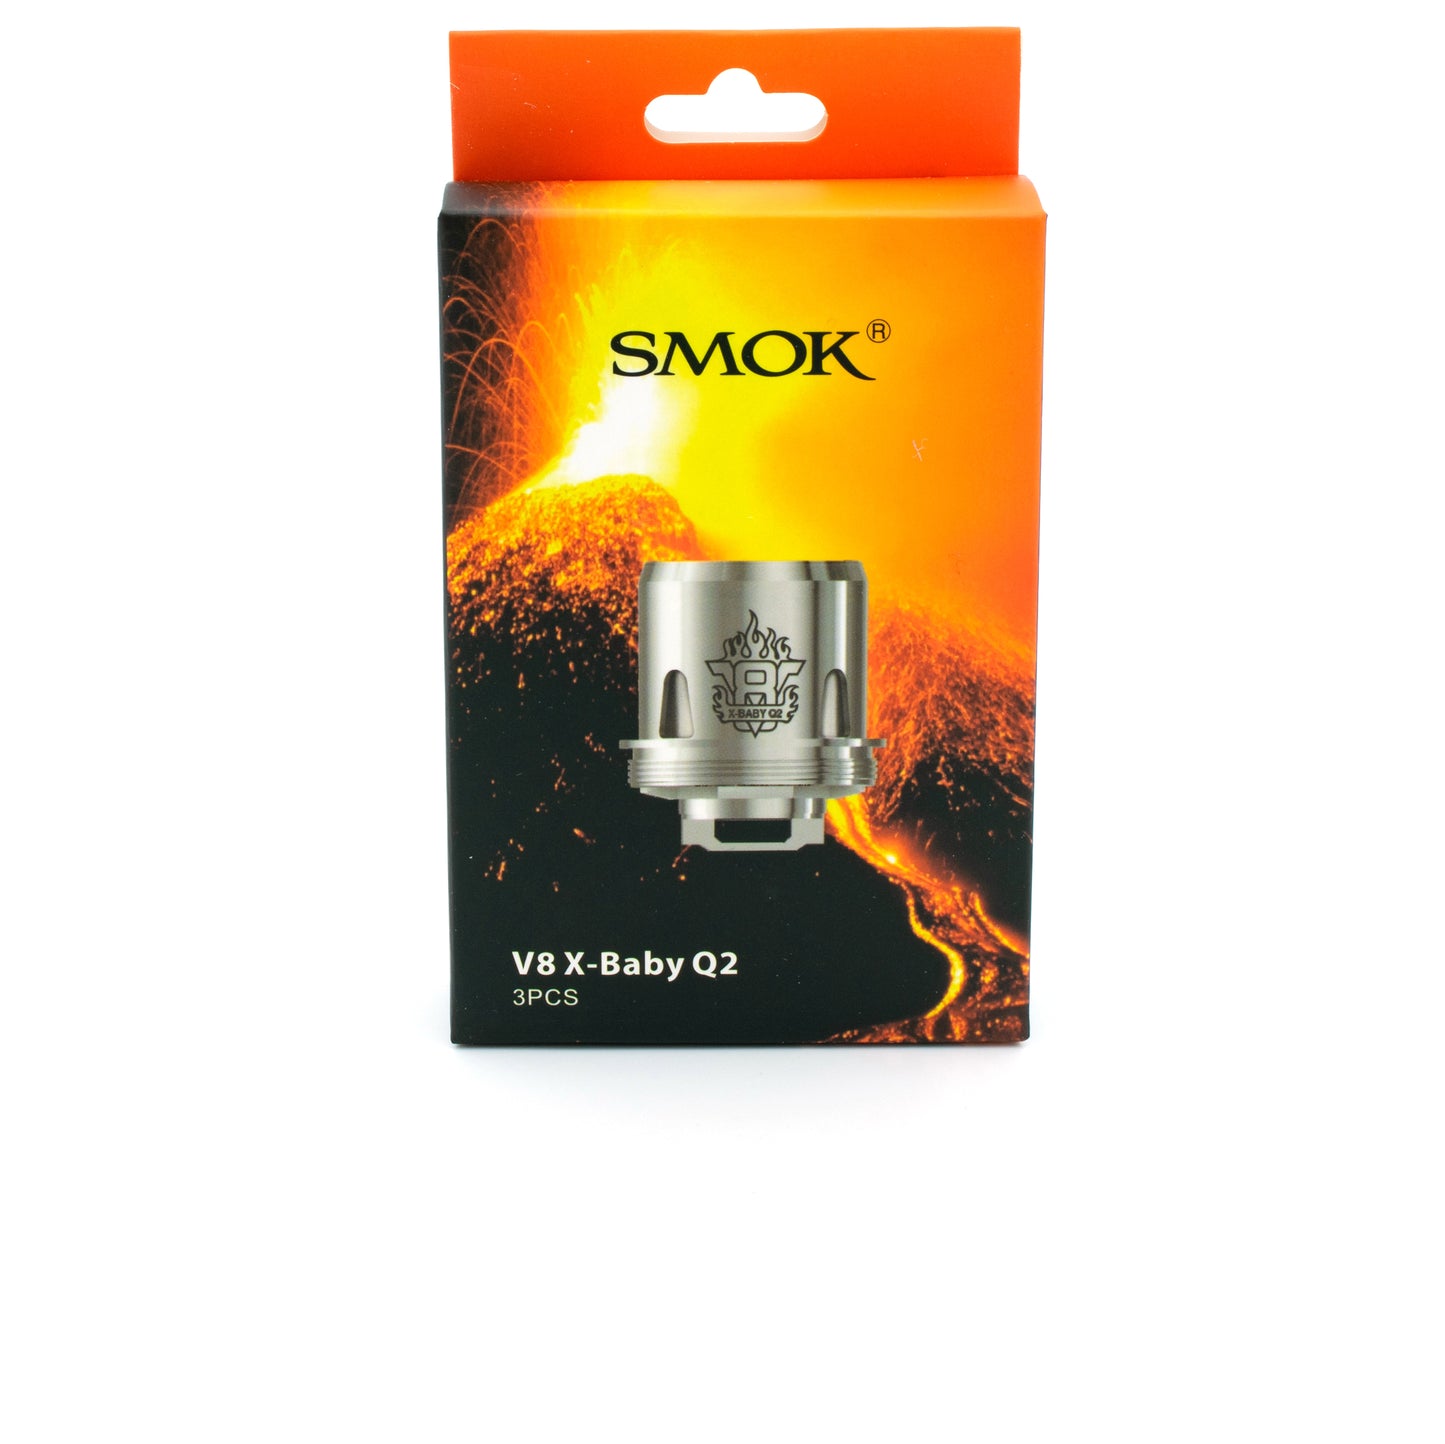 Smok V8 X-Baby Coils 3ct/Pack